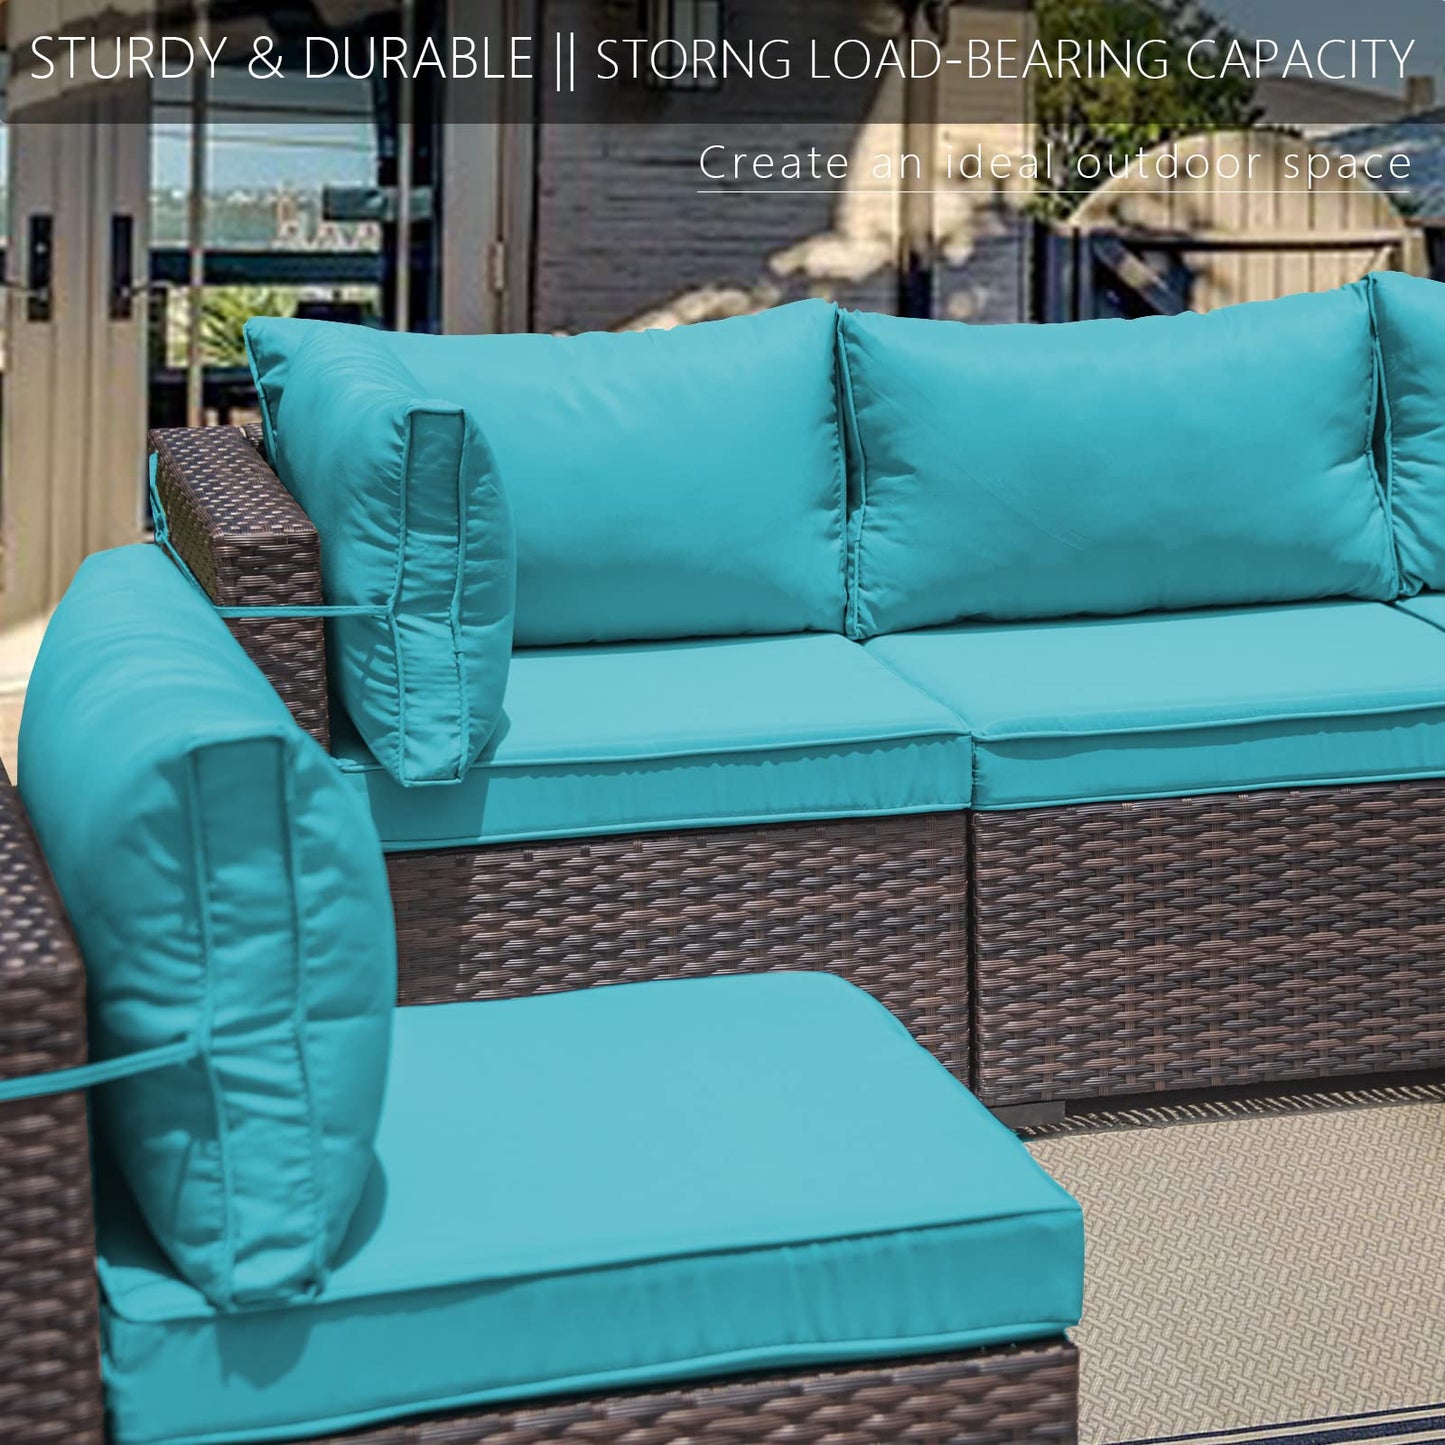 ALAULM 7 Piece Outdoor Patio Furniture Sets, Patio Furniture Outdoor Sectional Sofa - Blue